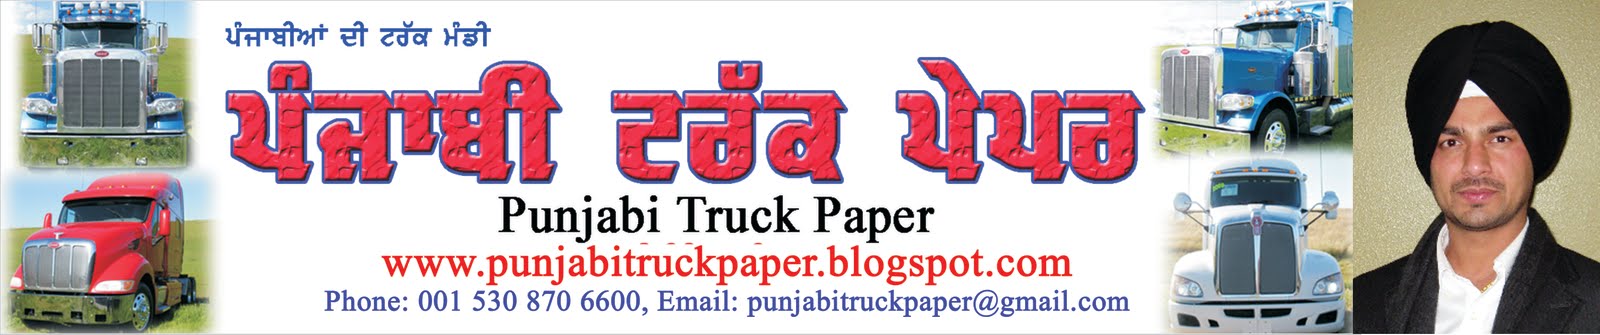 Punjabi Truck Paper